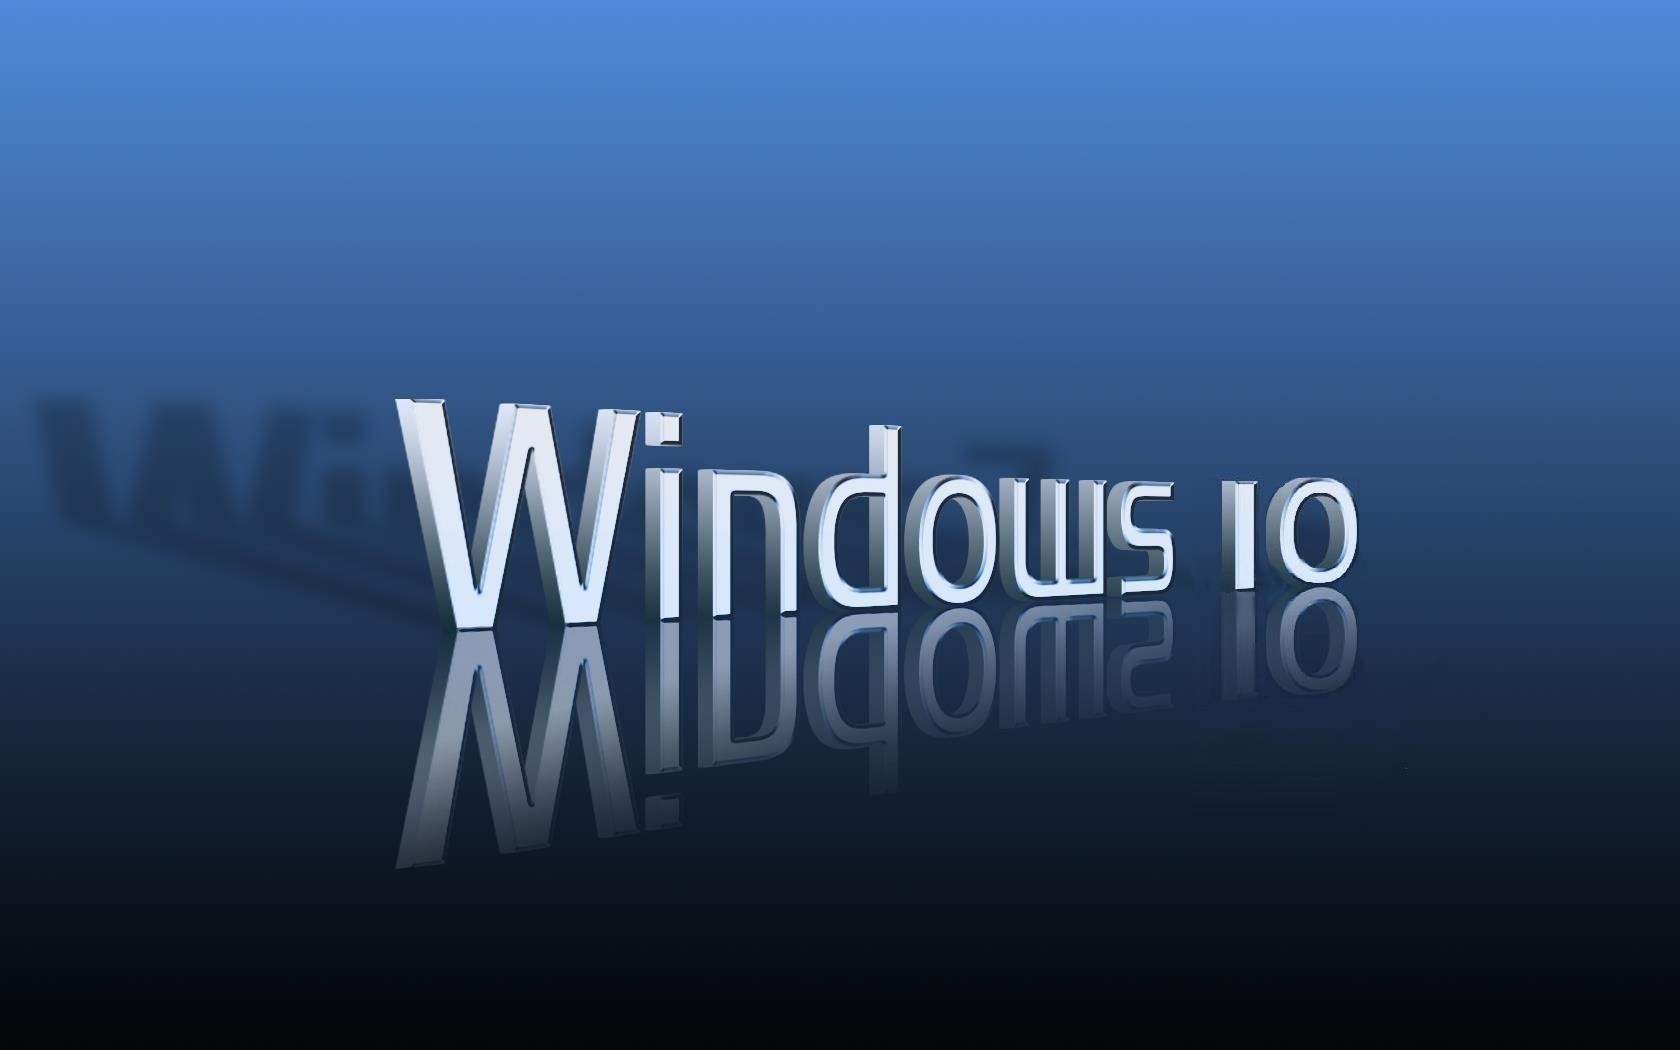 General 1680x1050 Windows 10 CGI numbers reflection Microsoft Windows blue background gradient